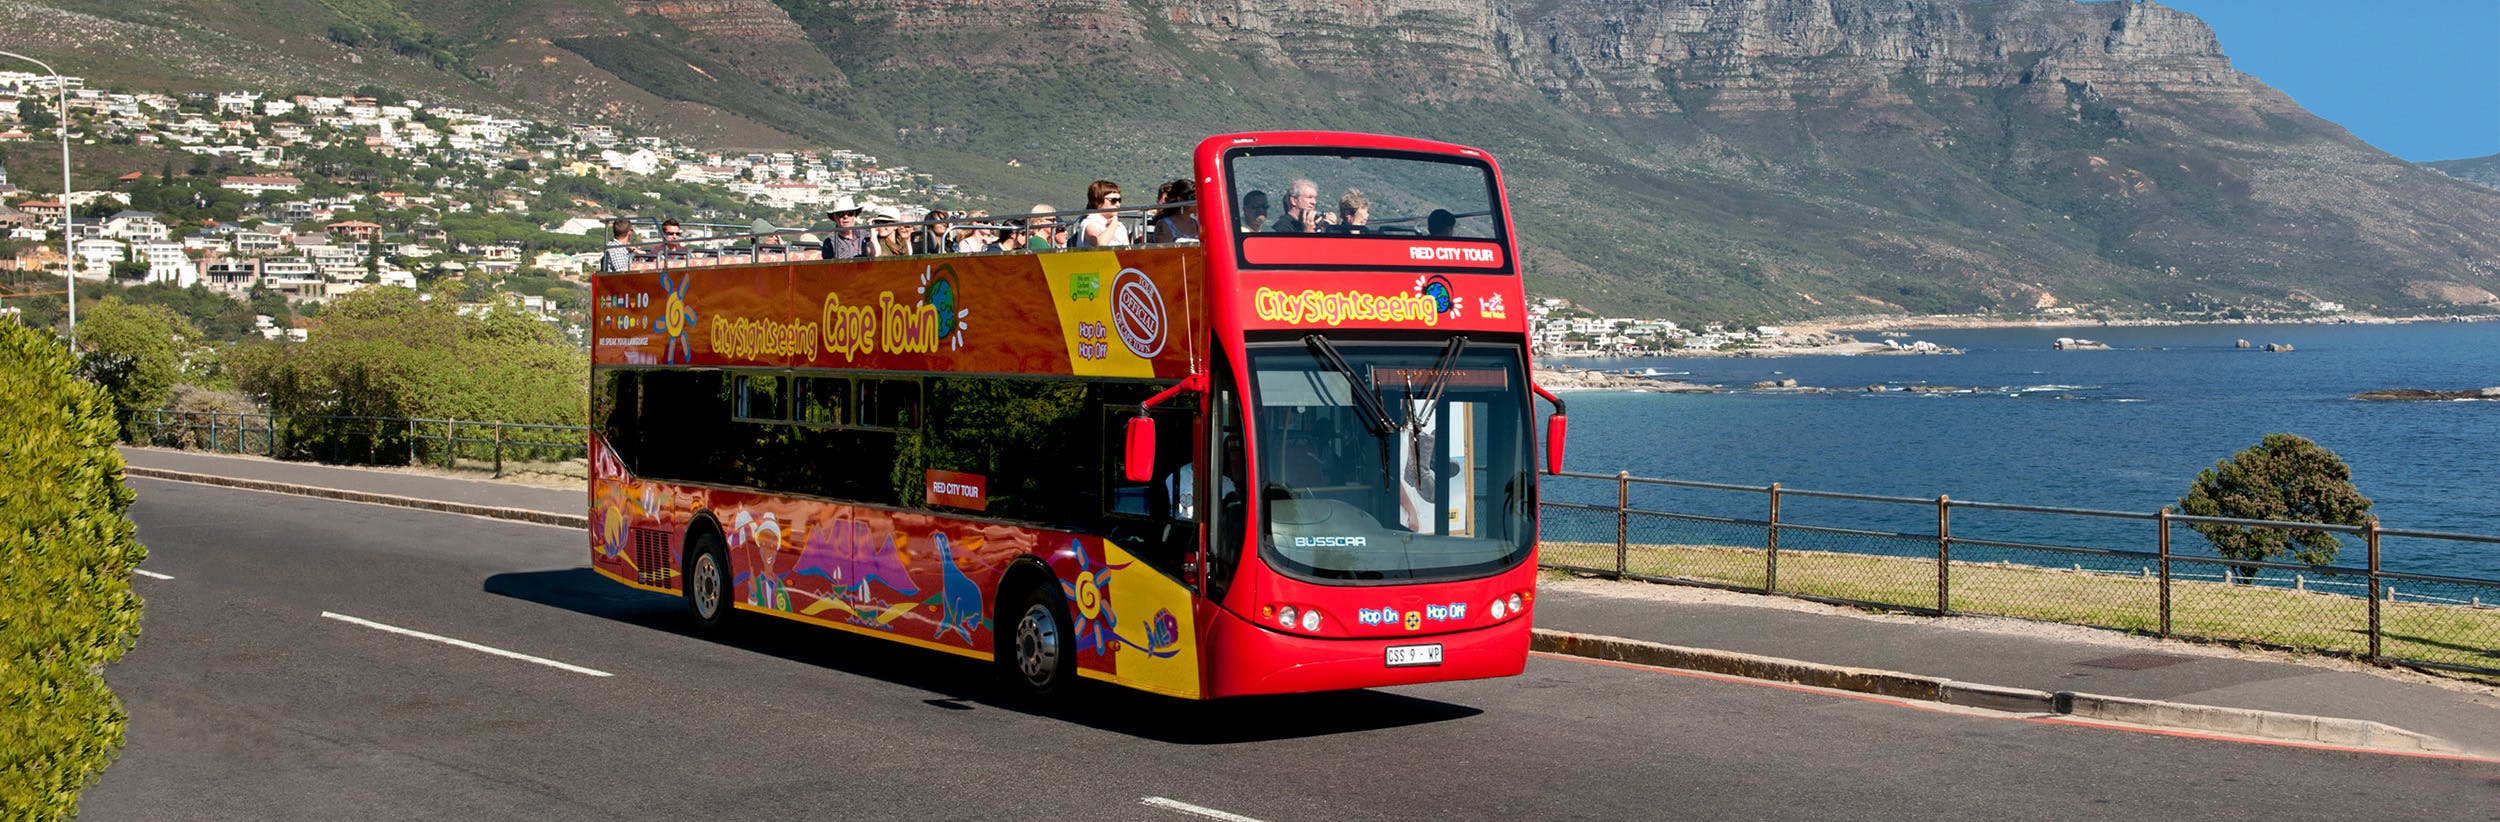 Hop-on, hop-off-ticket voor 1 dag City Sightseeing in Kaapstad